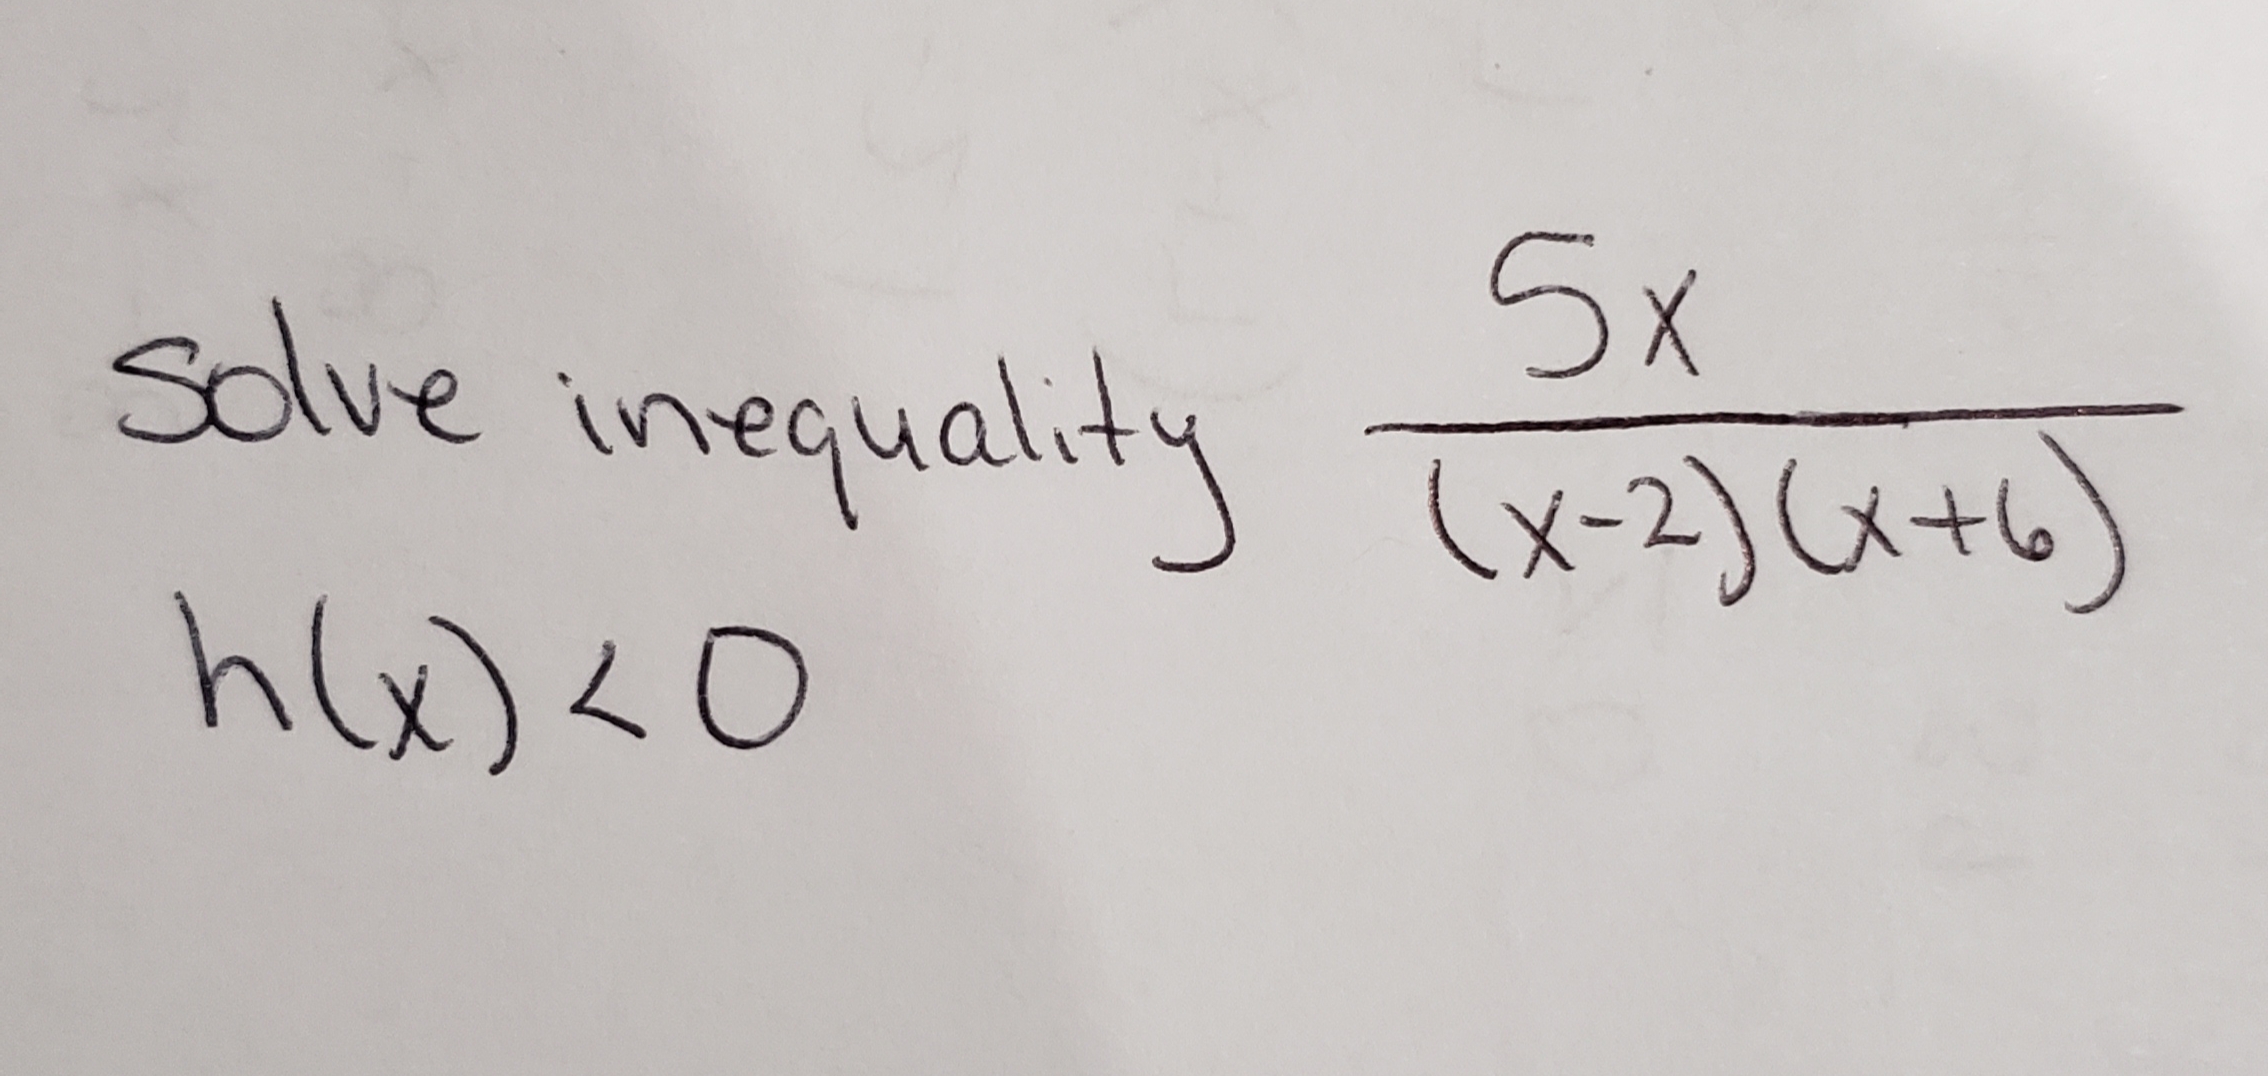 5x
sclve inequality x-2) Citb)
(x-2) Cx+b)
hlx)<O
